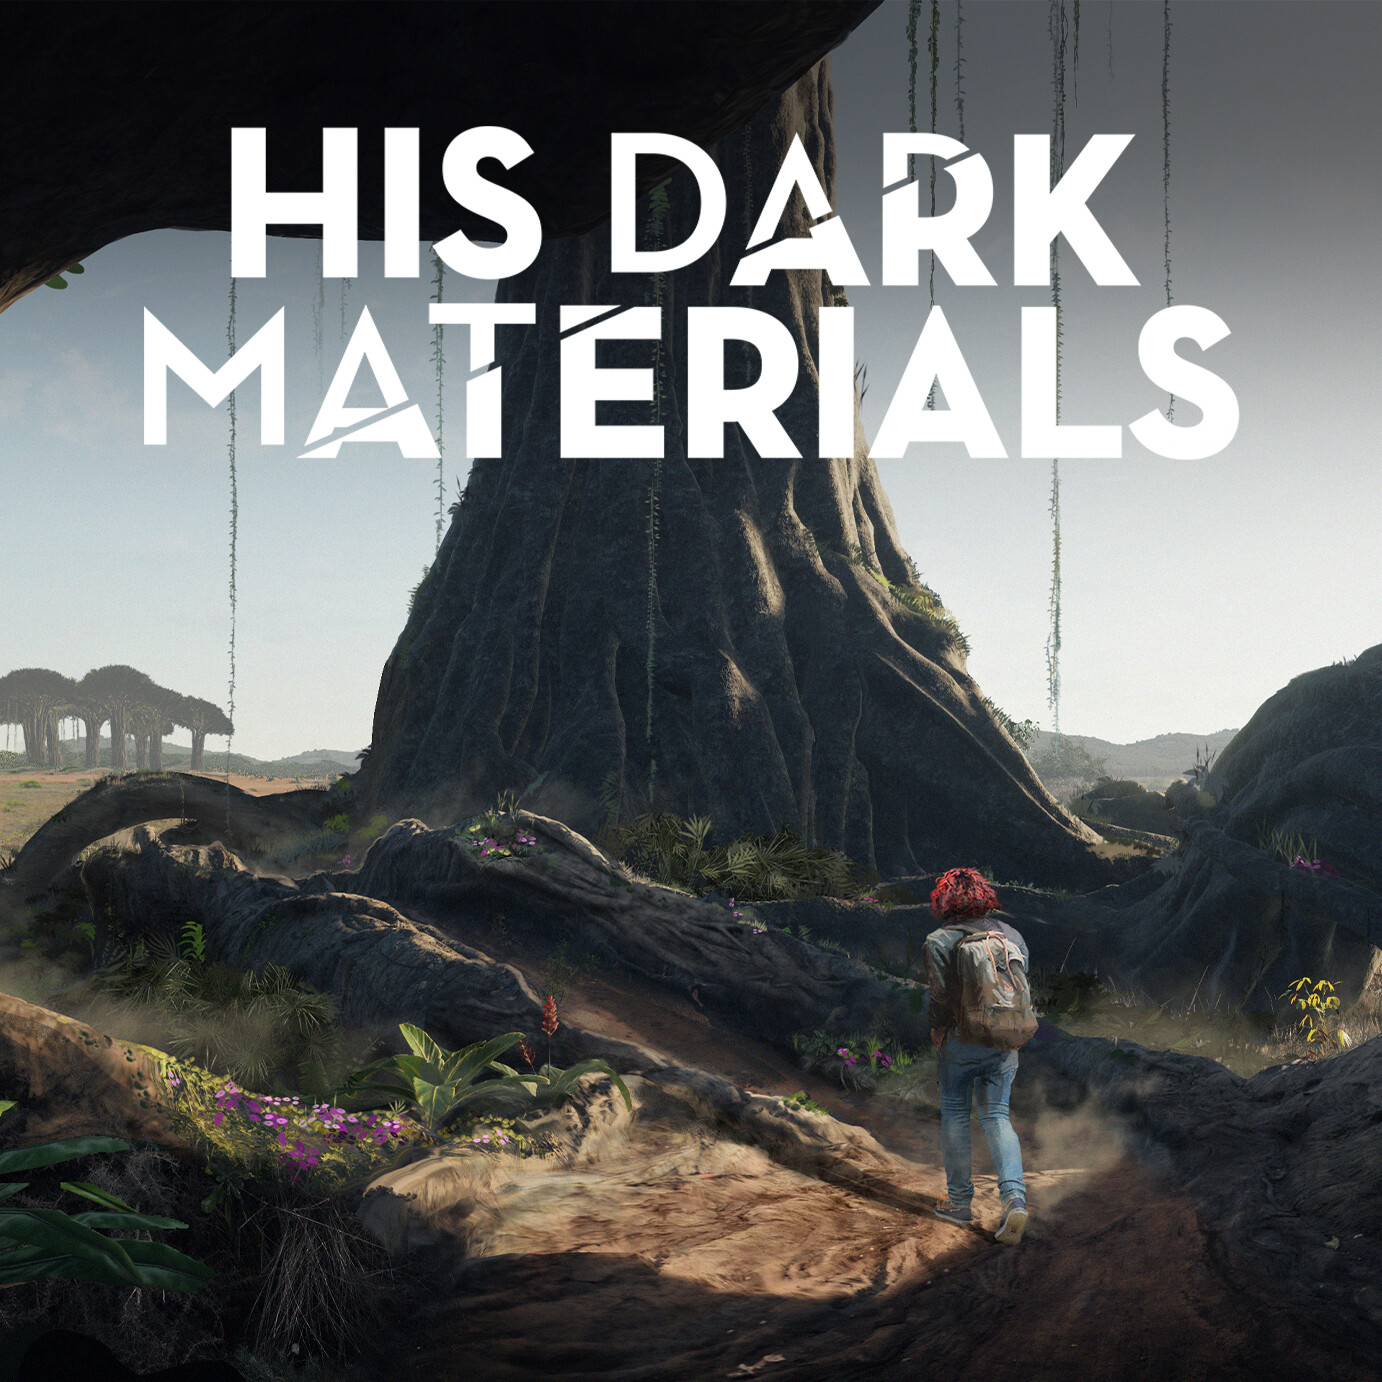 His Dark Materials - Mulefa world